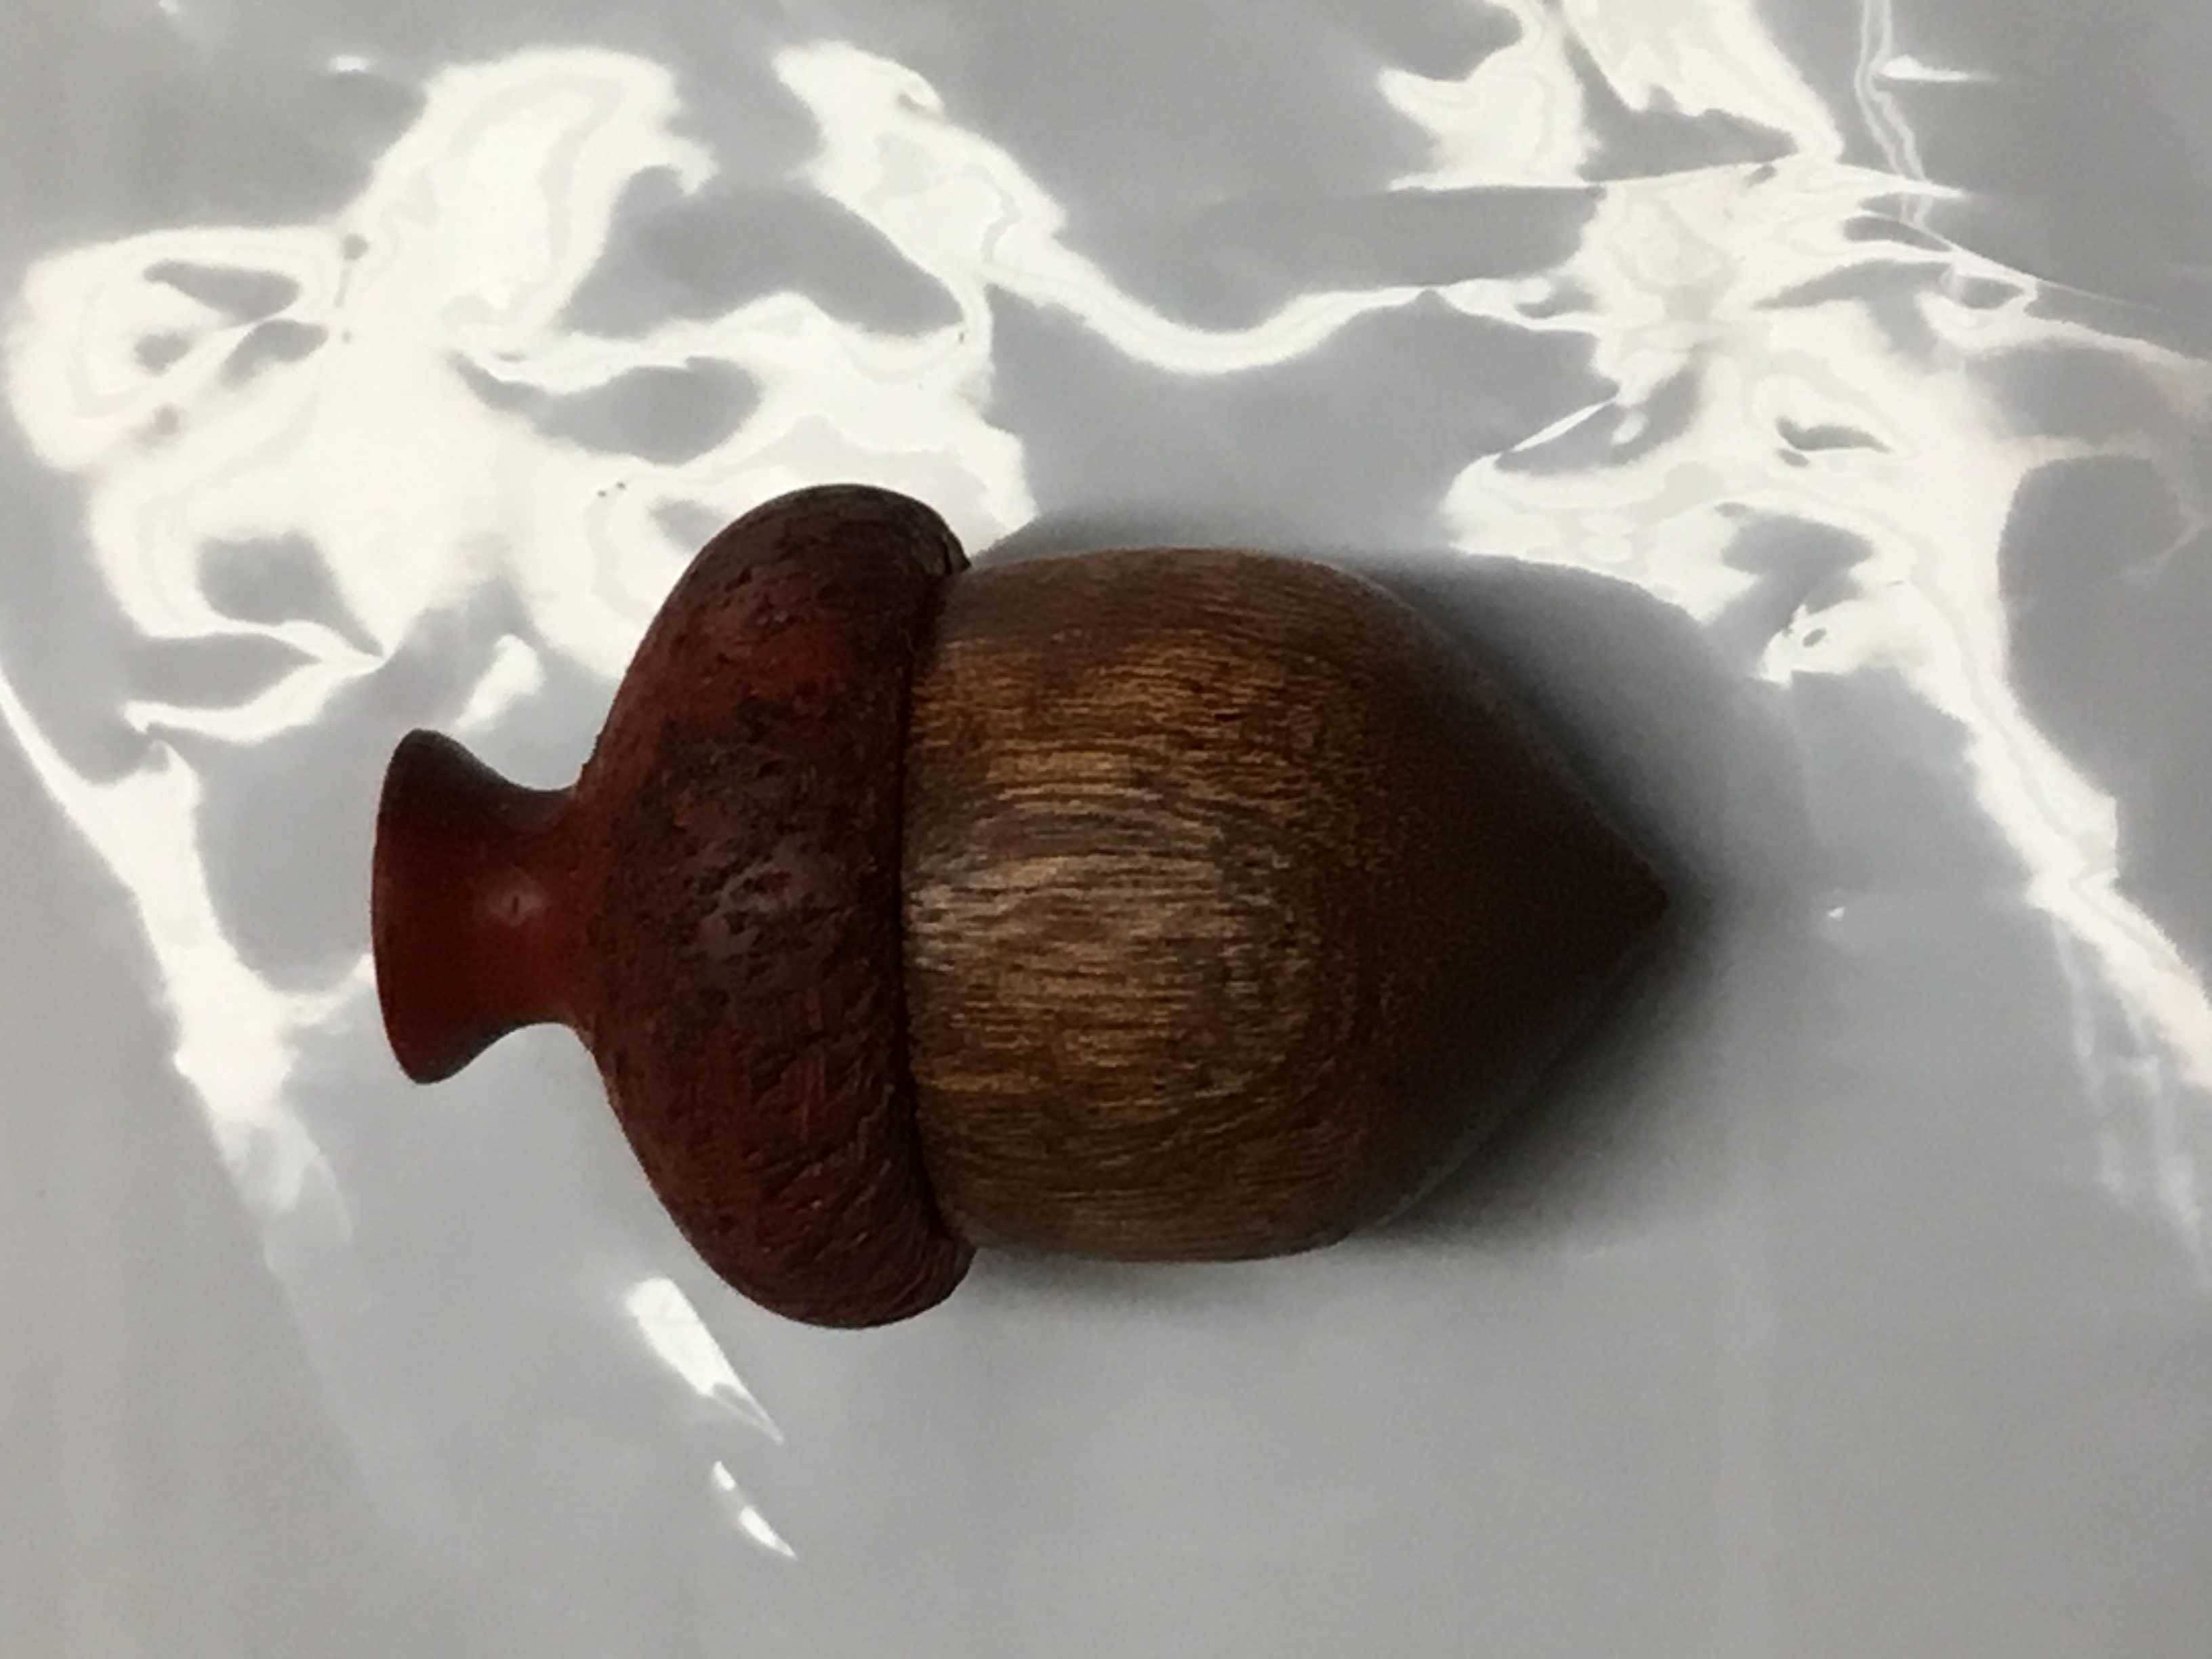 Box, vase, & acorn